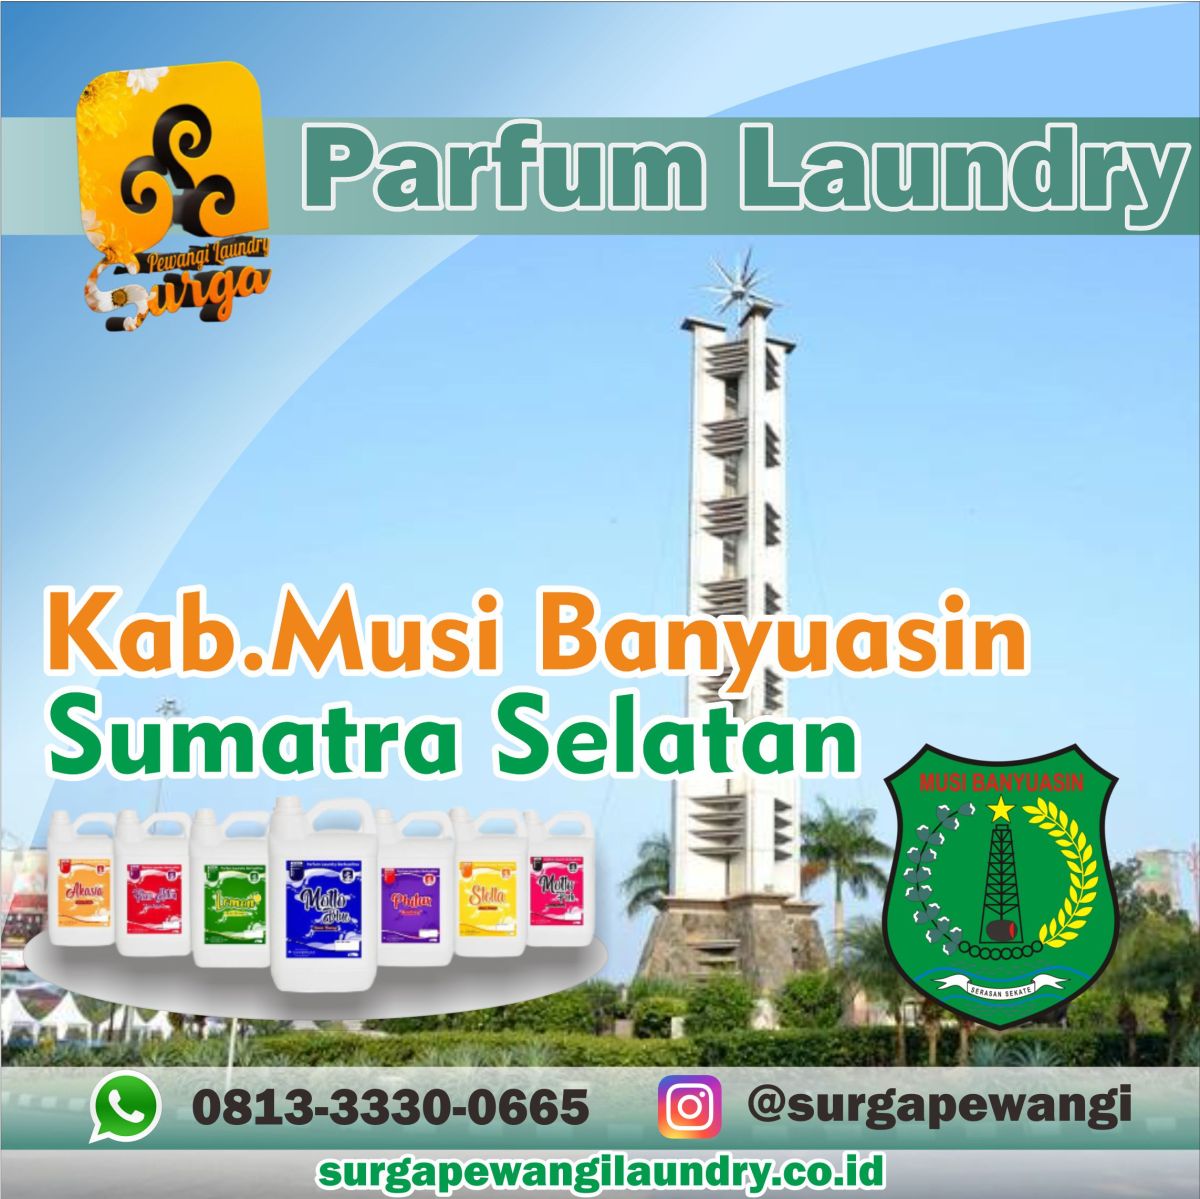 Parfum Laundry Kabupaten Musi Banyuasin, Sumatra Selatan